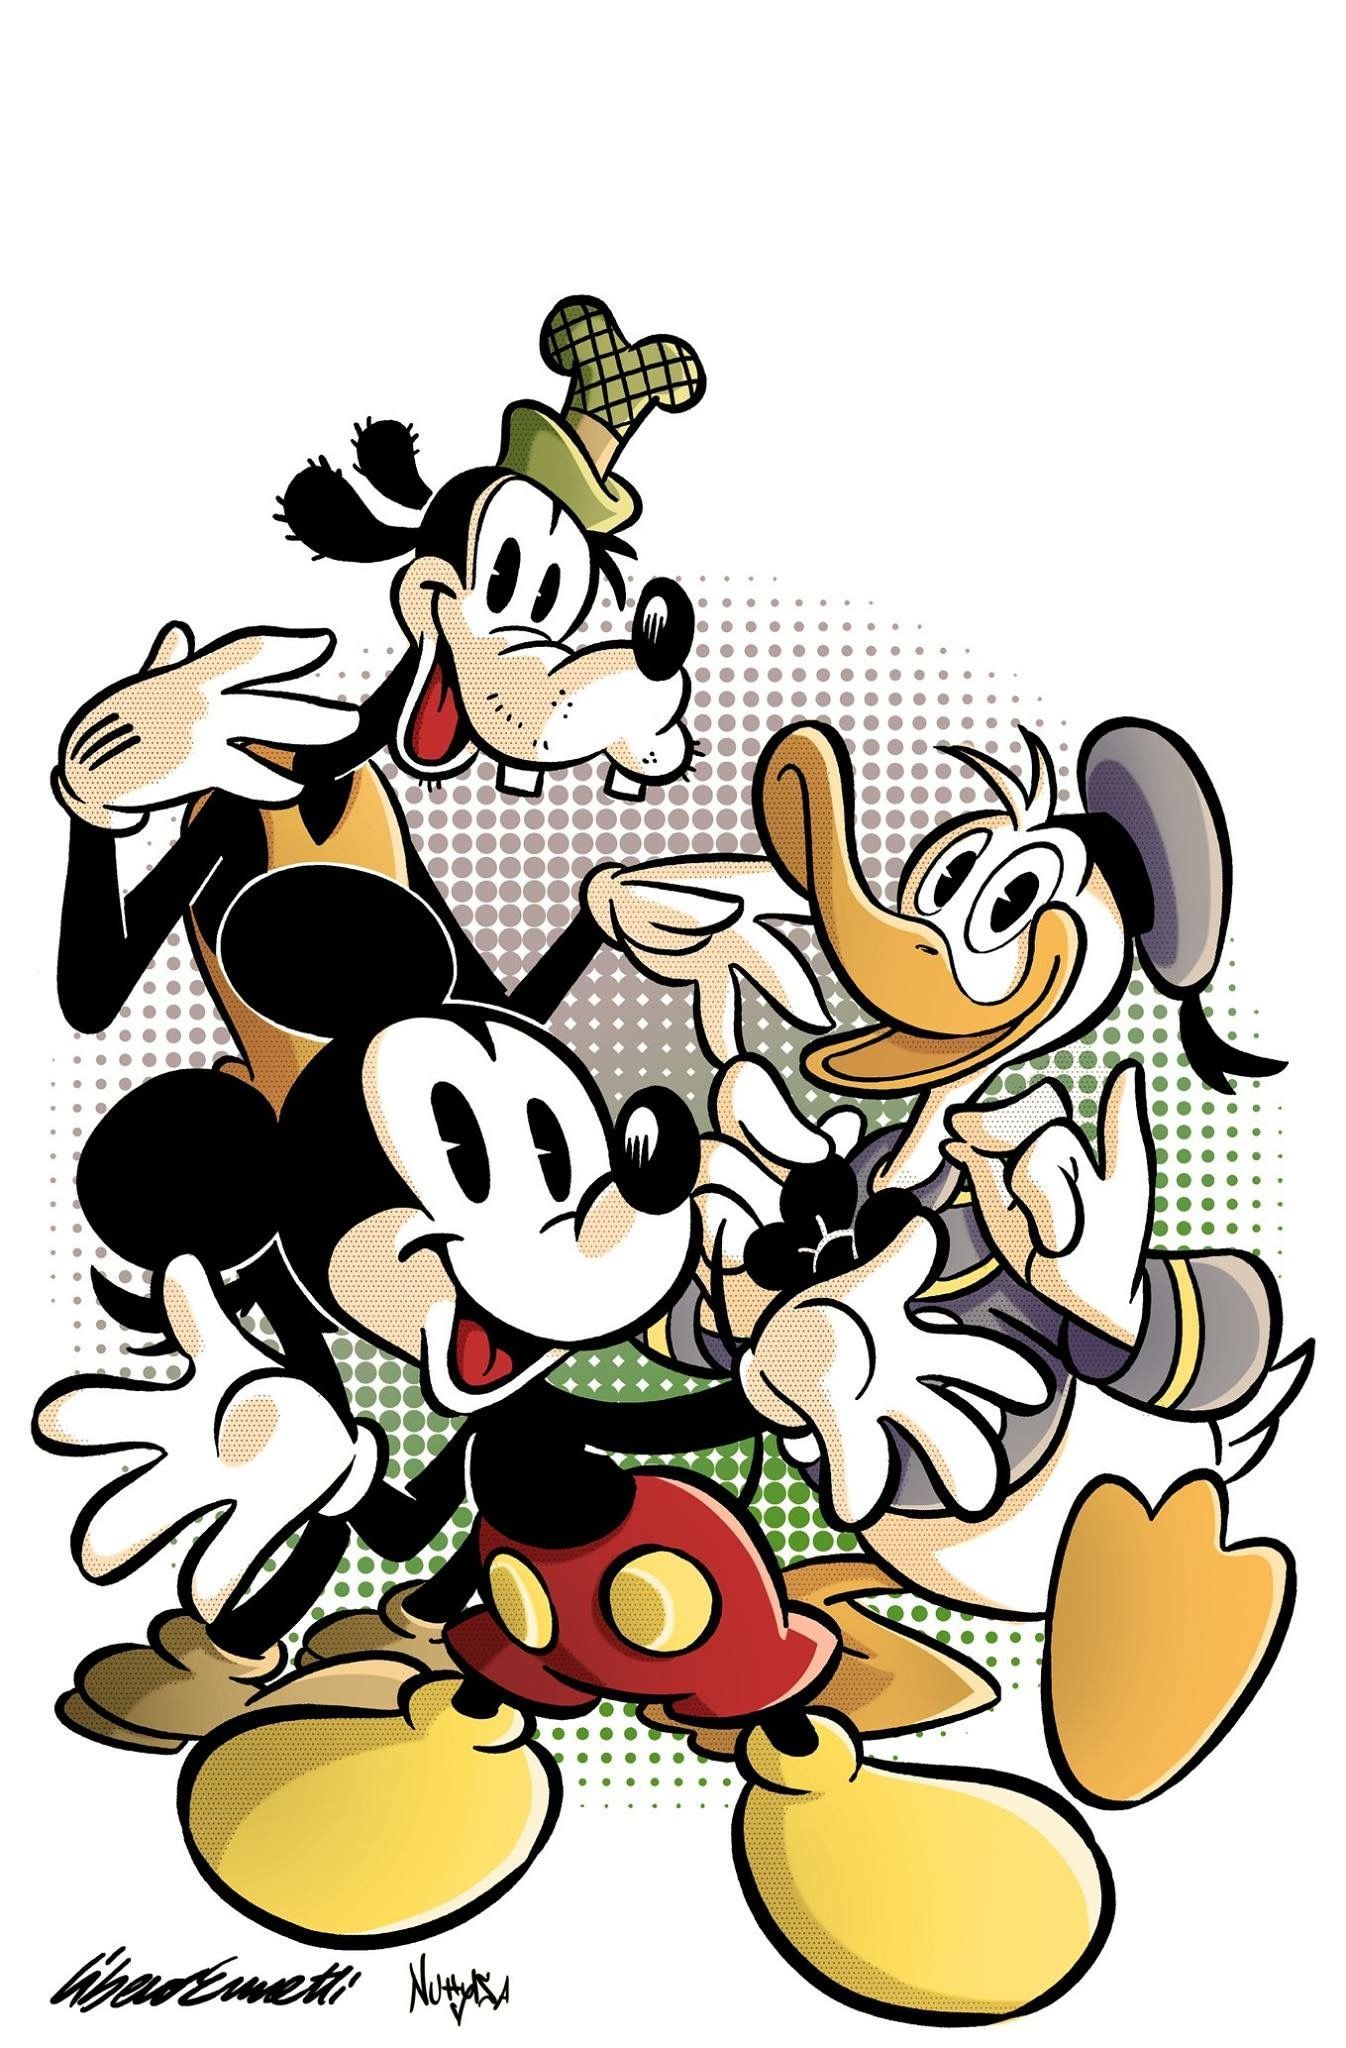 Disney Comics Made In Italy. Caricaturas, Desenhos animados, Estampas